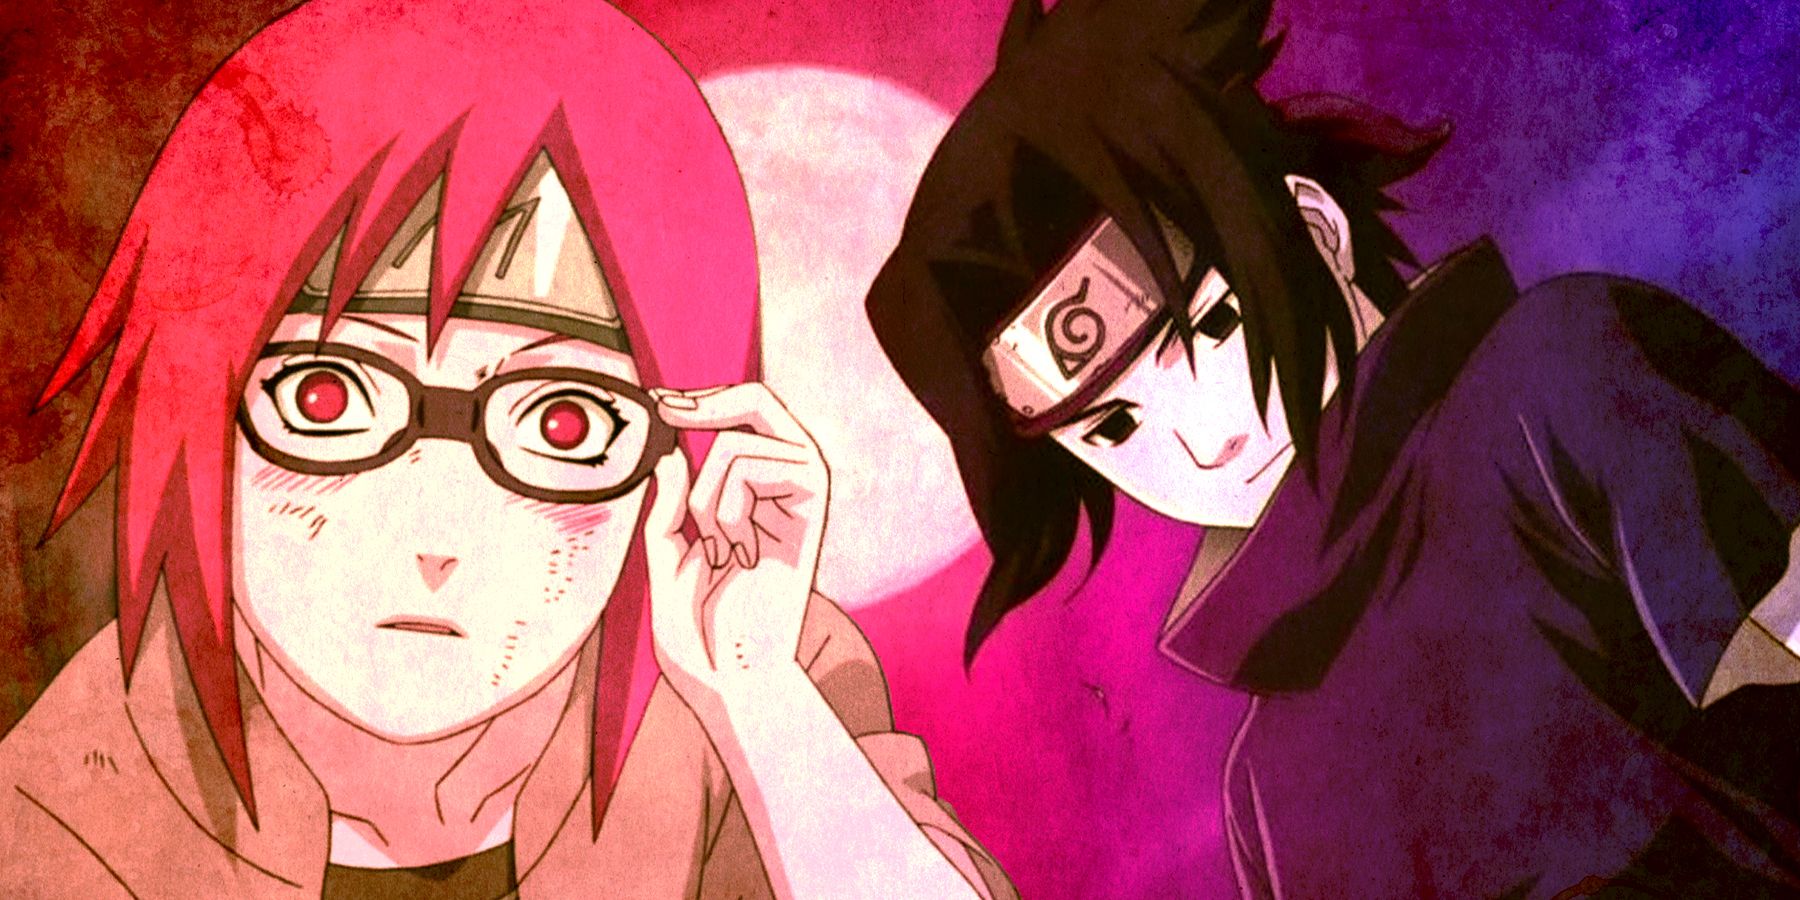 Boruto anime accidentally gives Sasuke strong healing powers